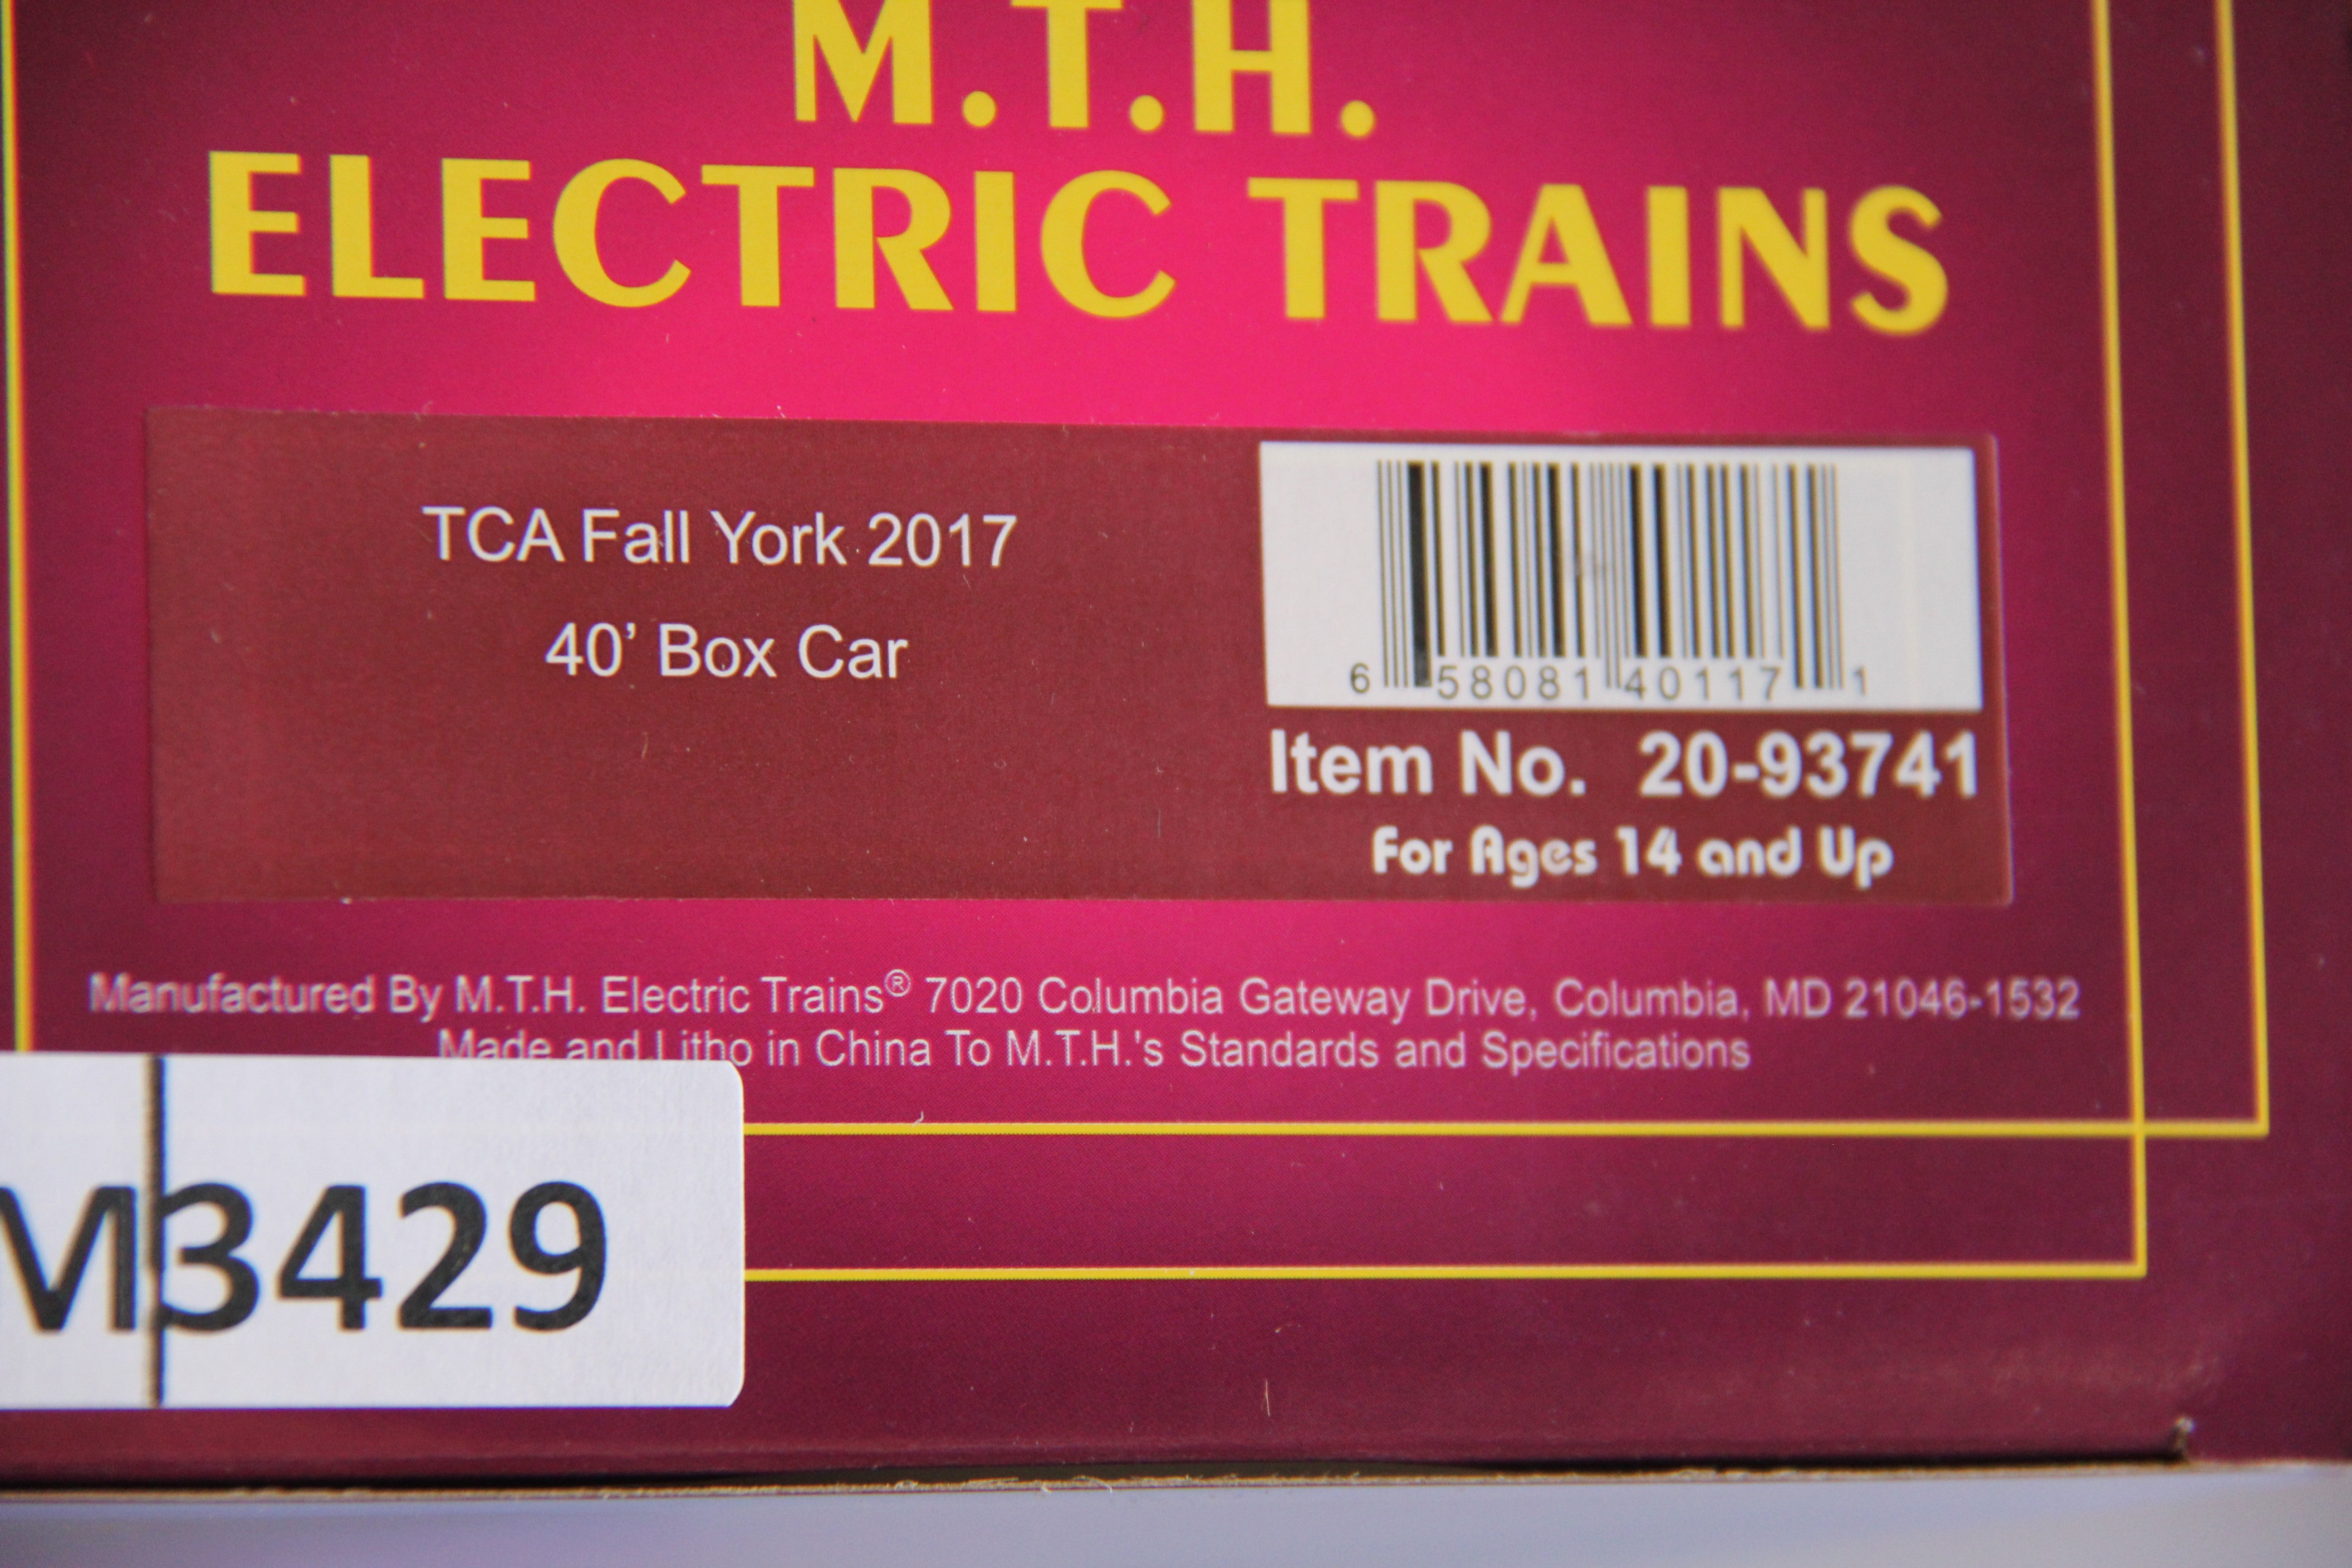 MTH 20-93741 TCA Fall York (2017) 40' Box Car-Second hand-M3429